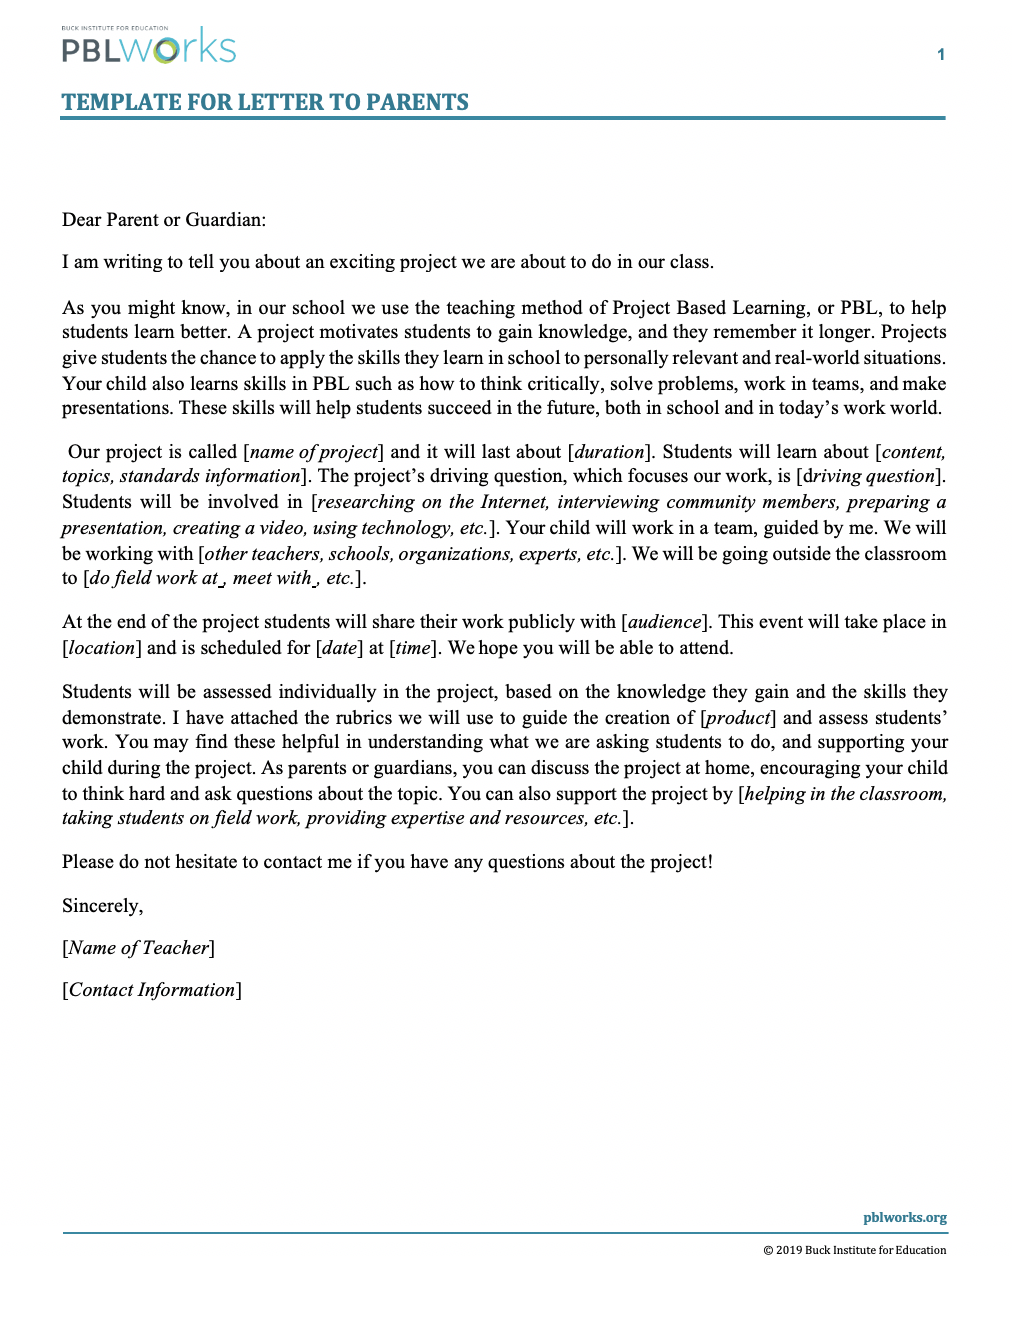 formal letter format to a teacher